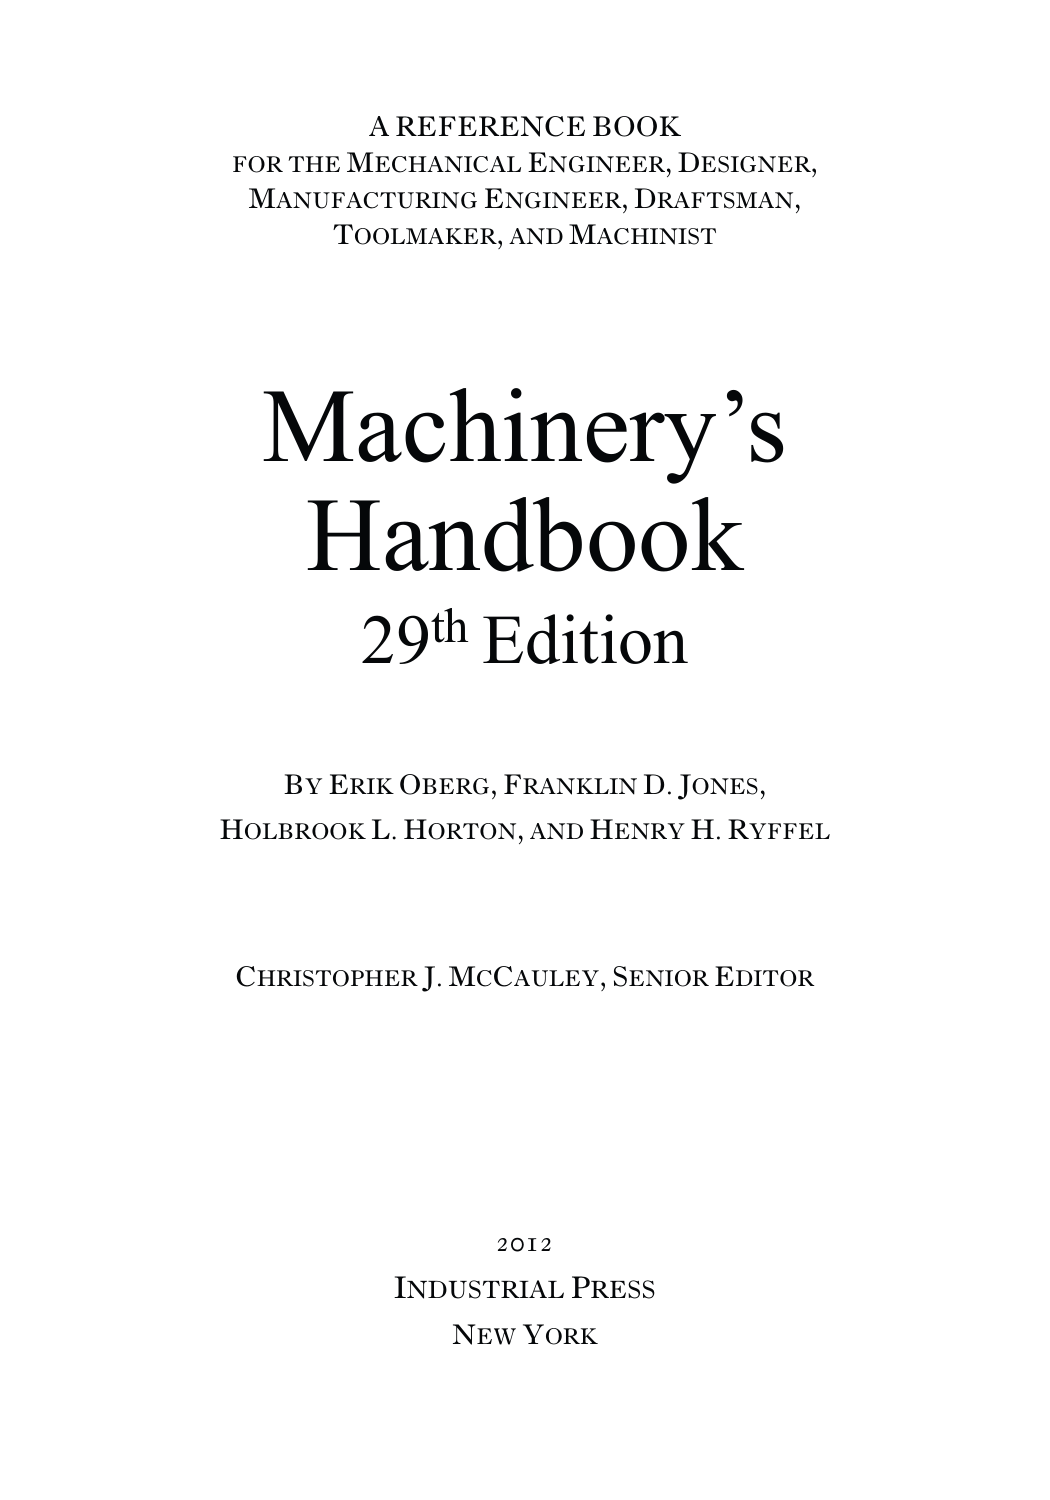 Machinery's Handbook 29th Edition (2012)